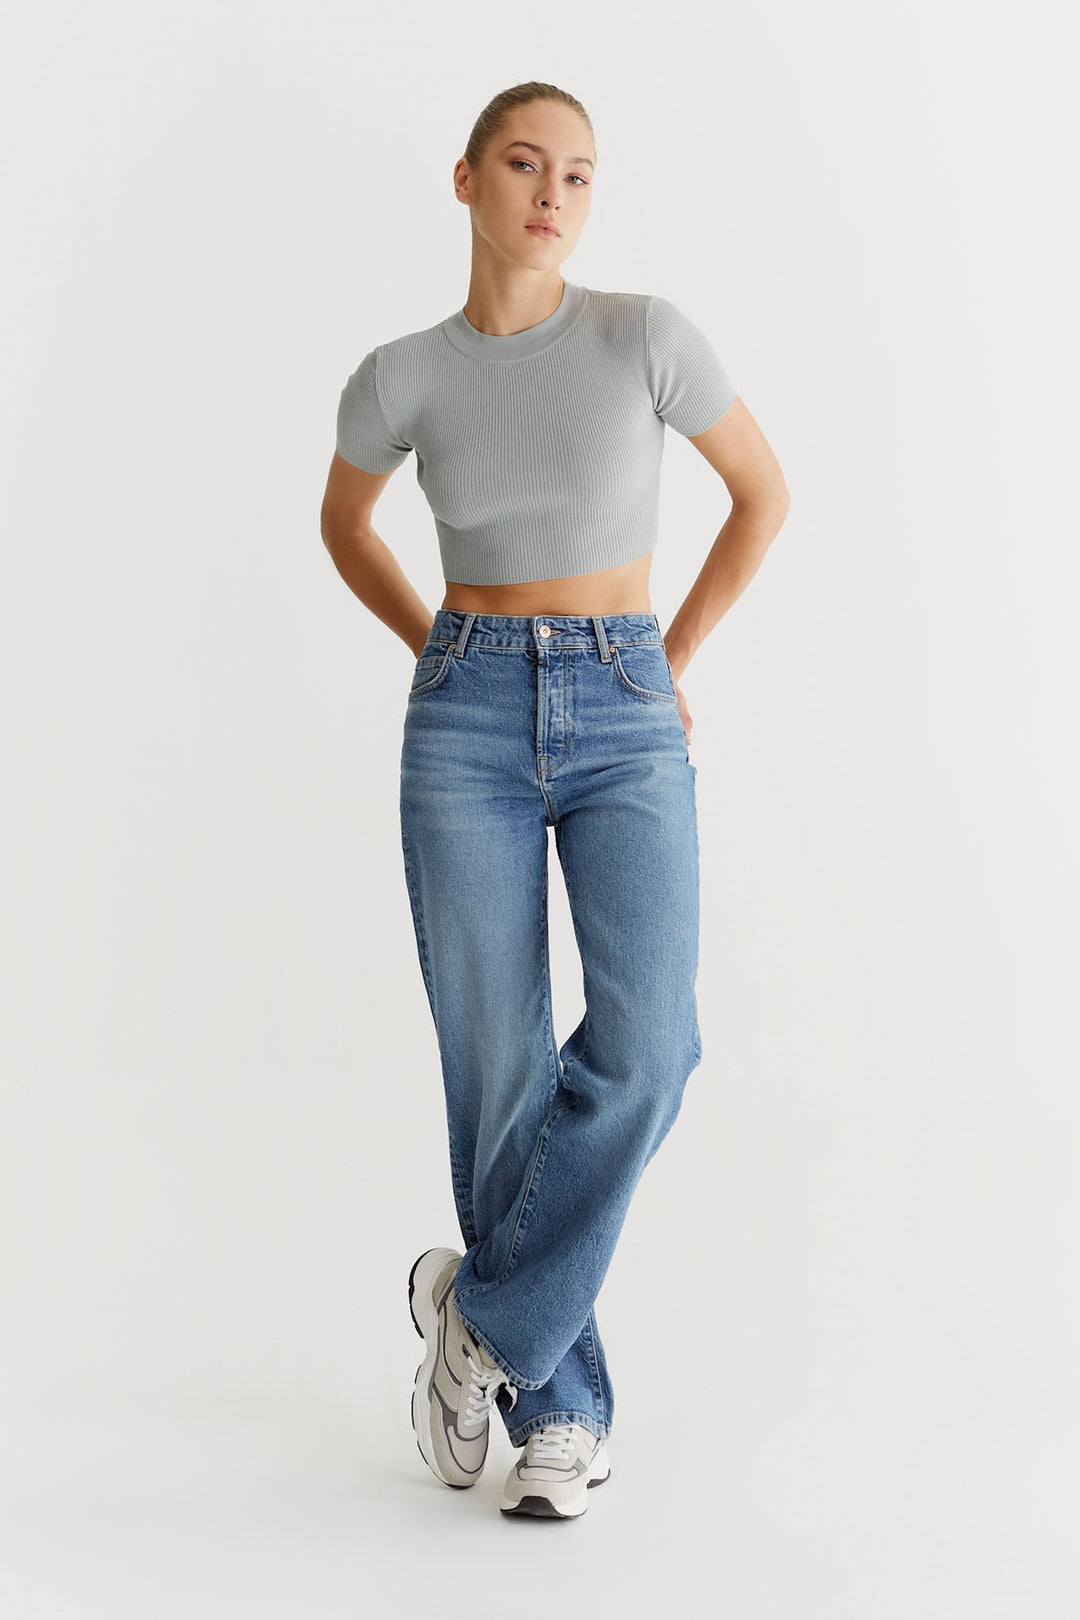 Wide Leg Jeans für Damen C.O.J Sara in blau ❤ UNiKAT Store Karlsruhe